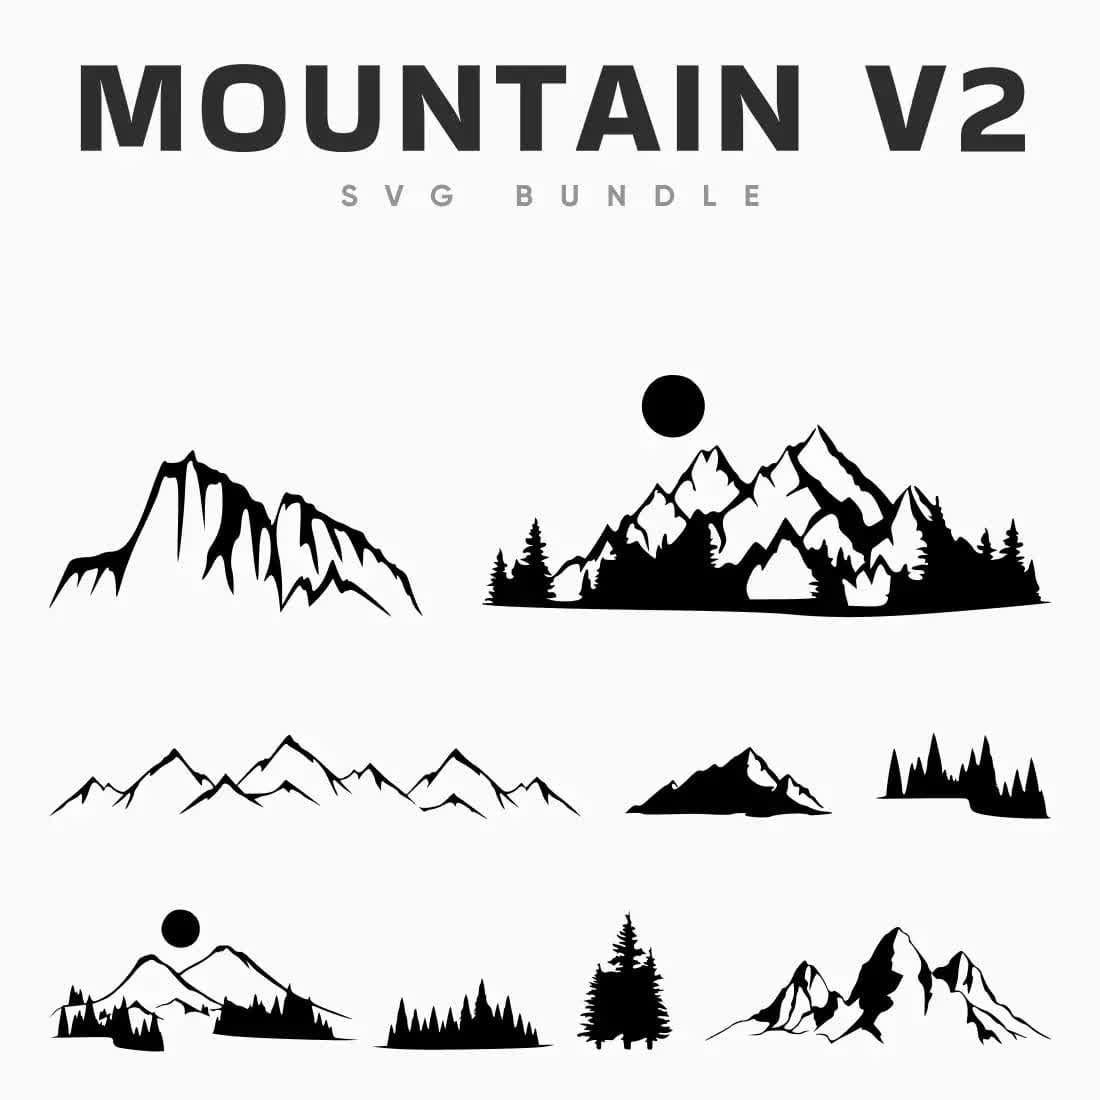 Mountain V2 SVG Bundle Preview 2.